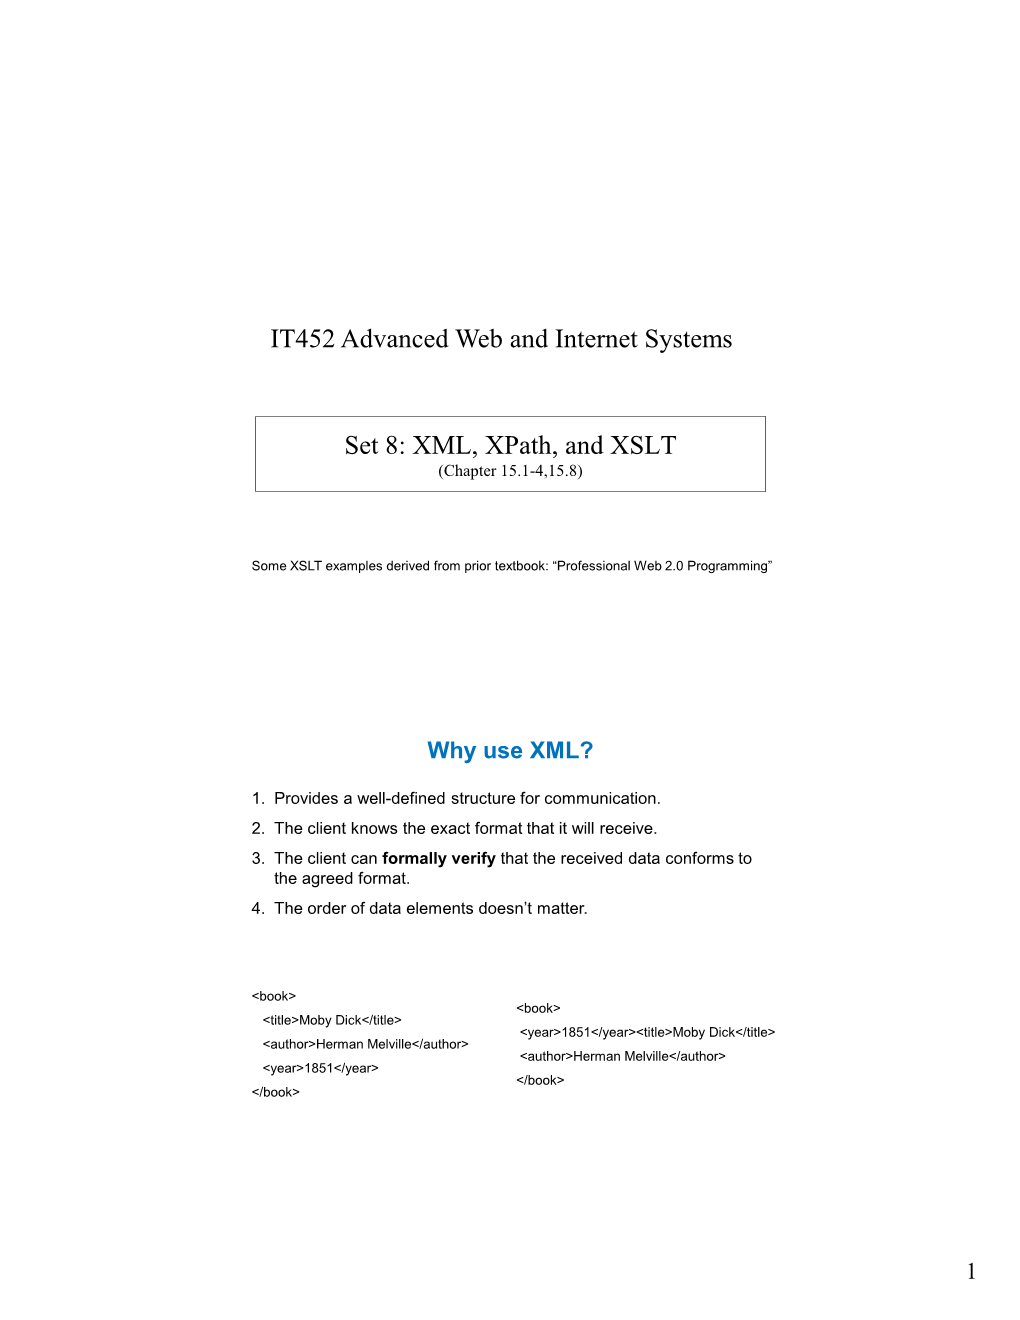 Set 8: XML, Xpath, and XSLT IT452 Advanced Web and Internet Systems